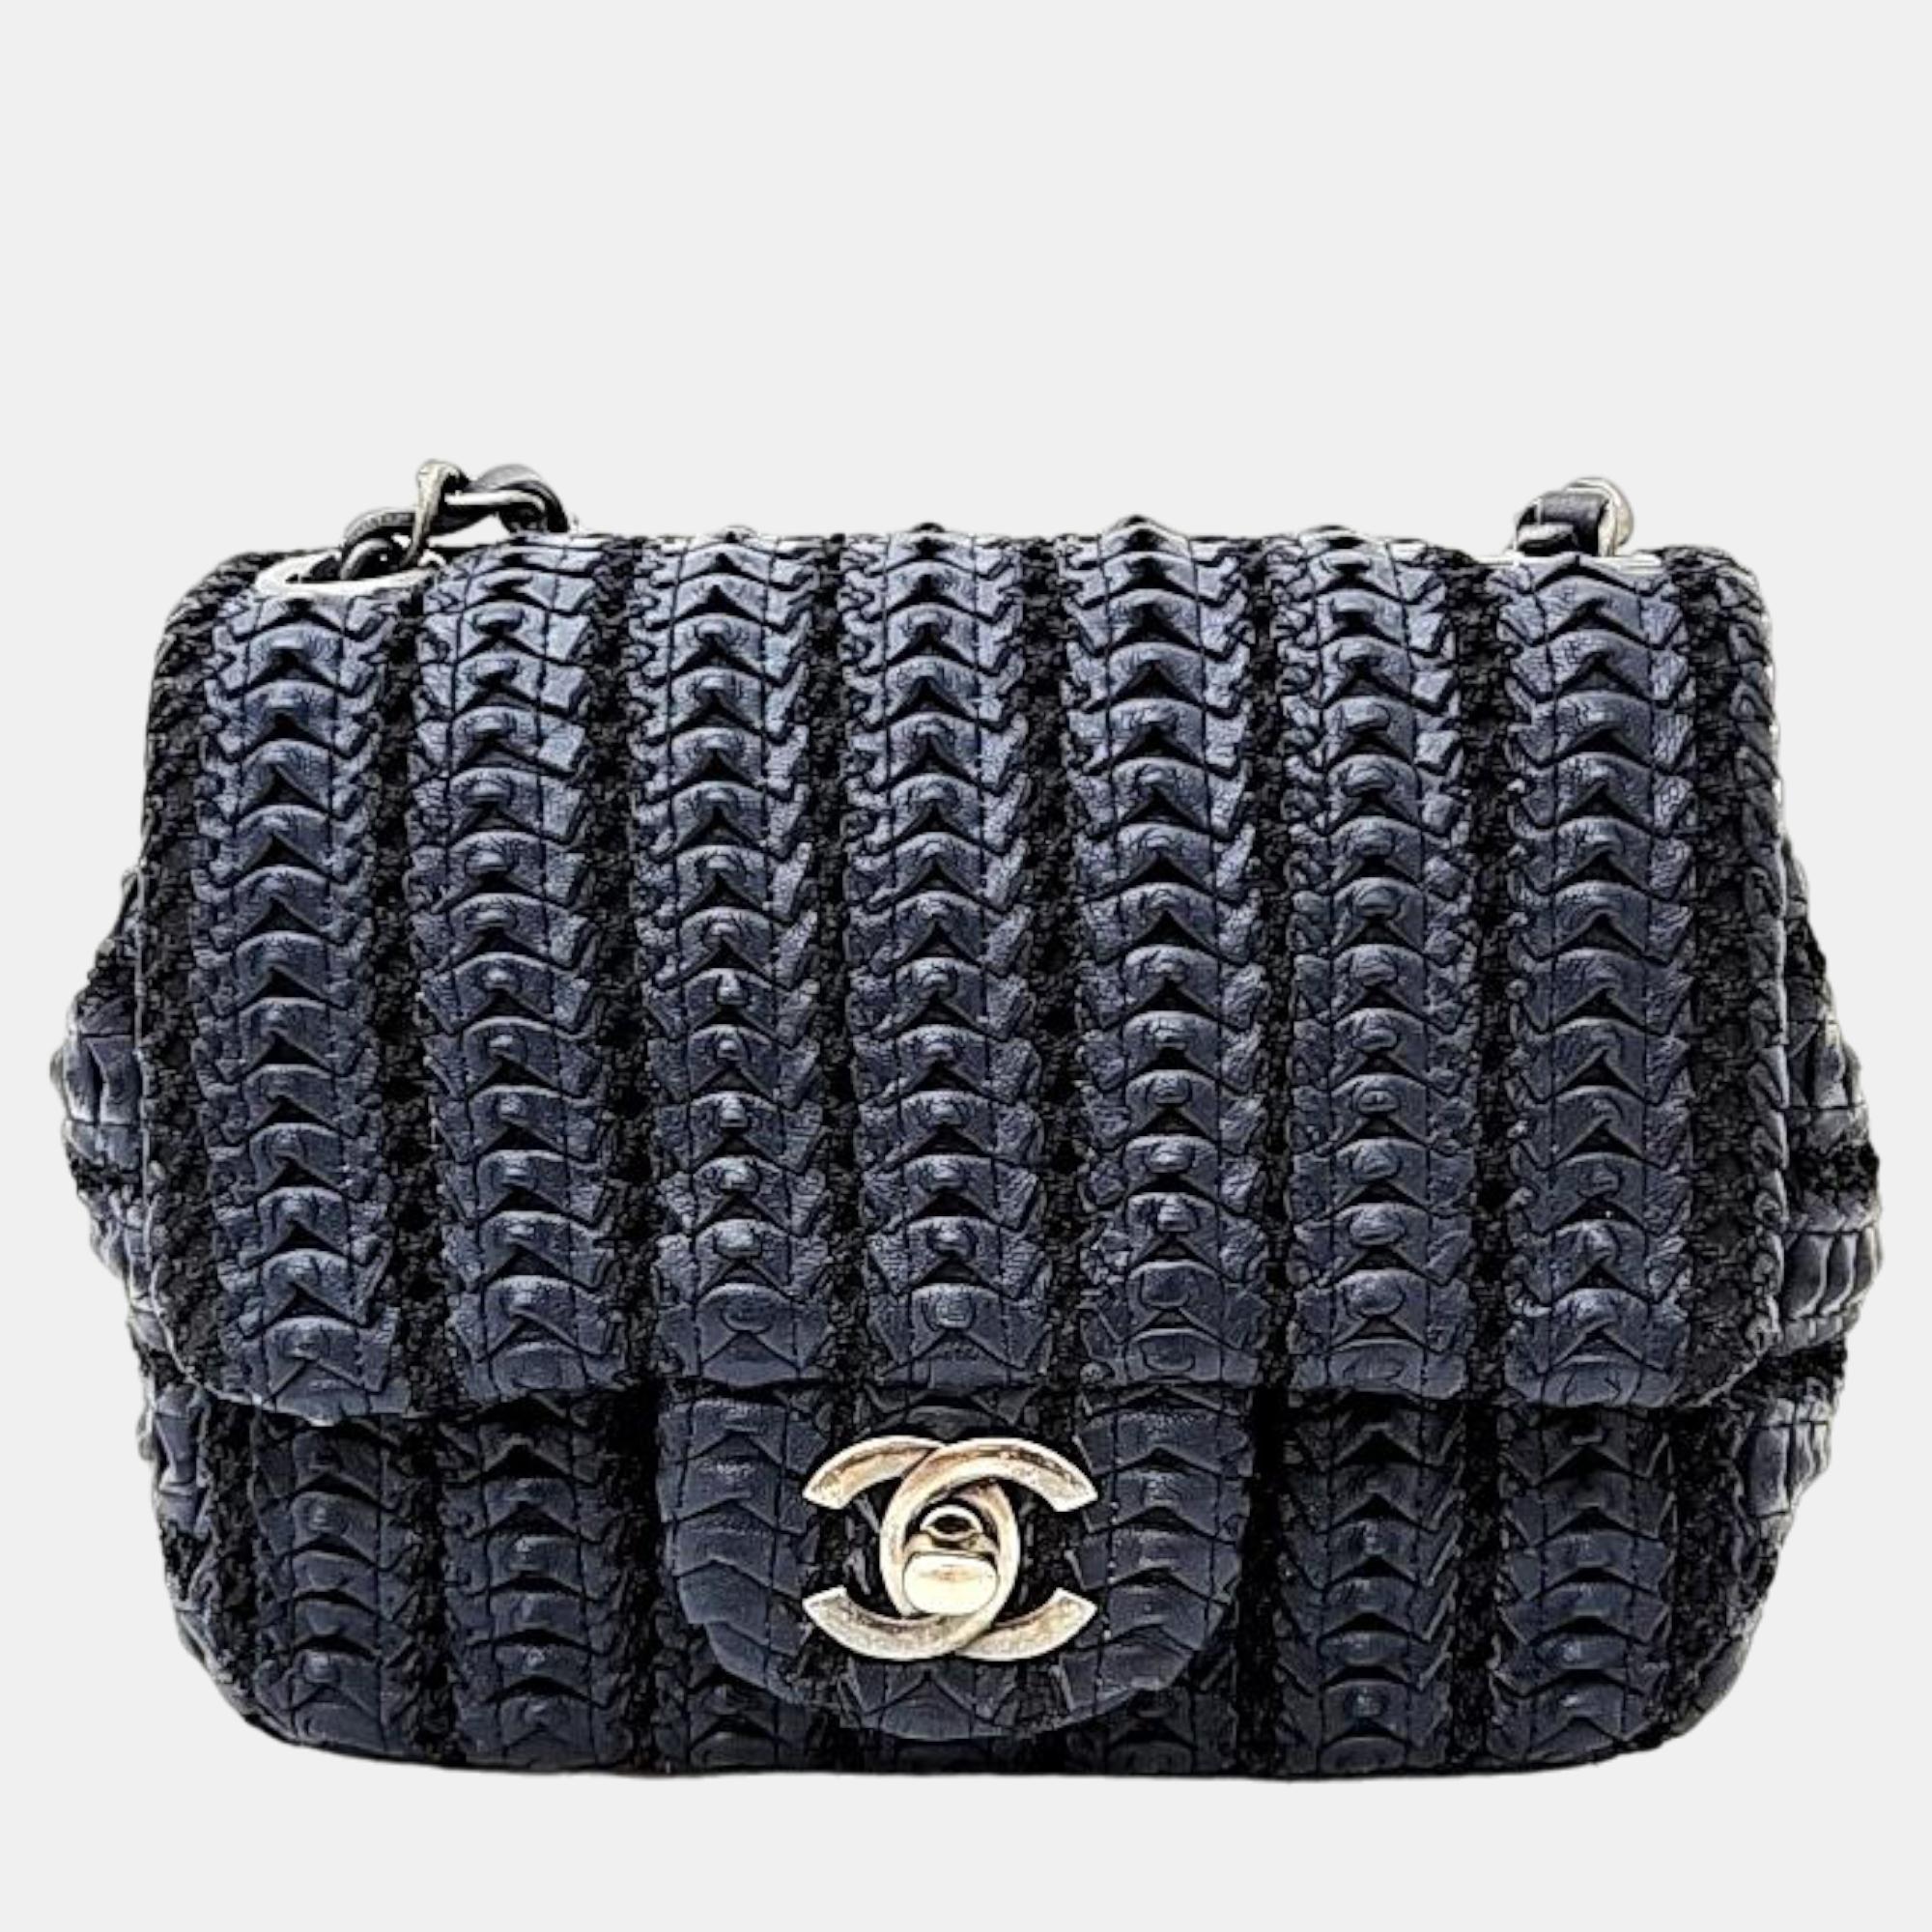 Chanel navy blue lambskin leather crochet mini flap bag shoulder bag